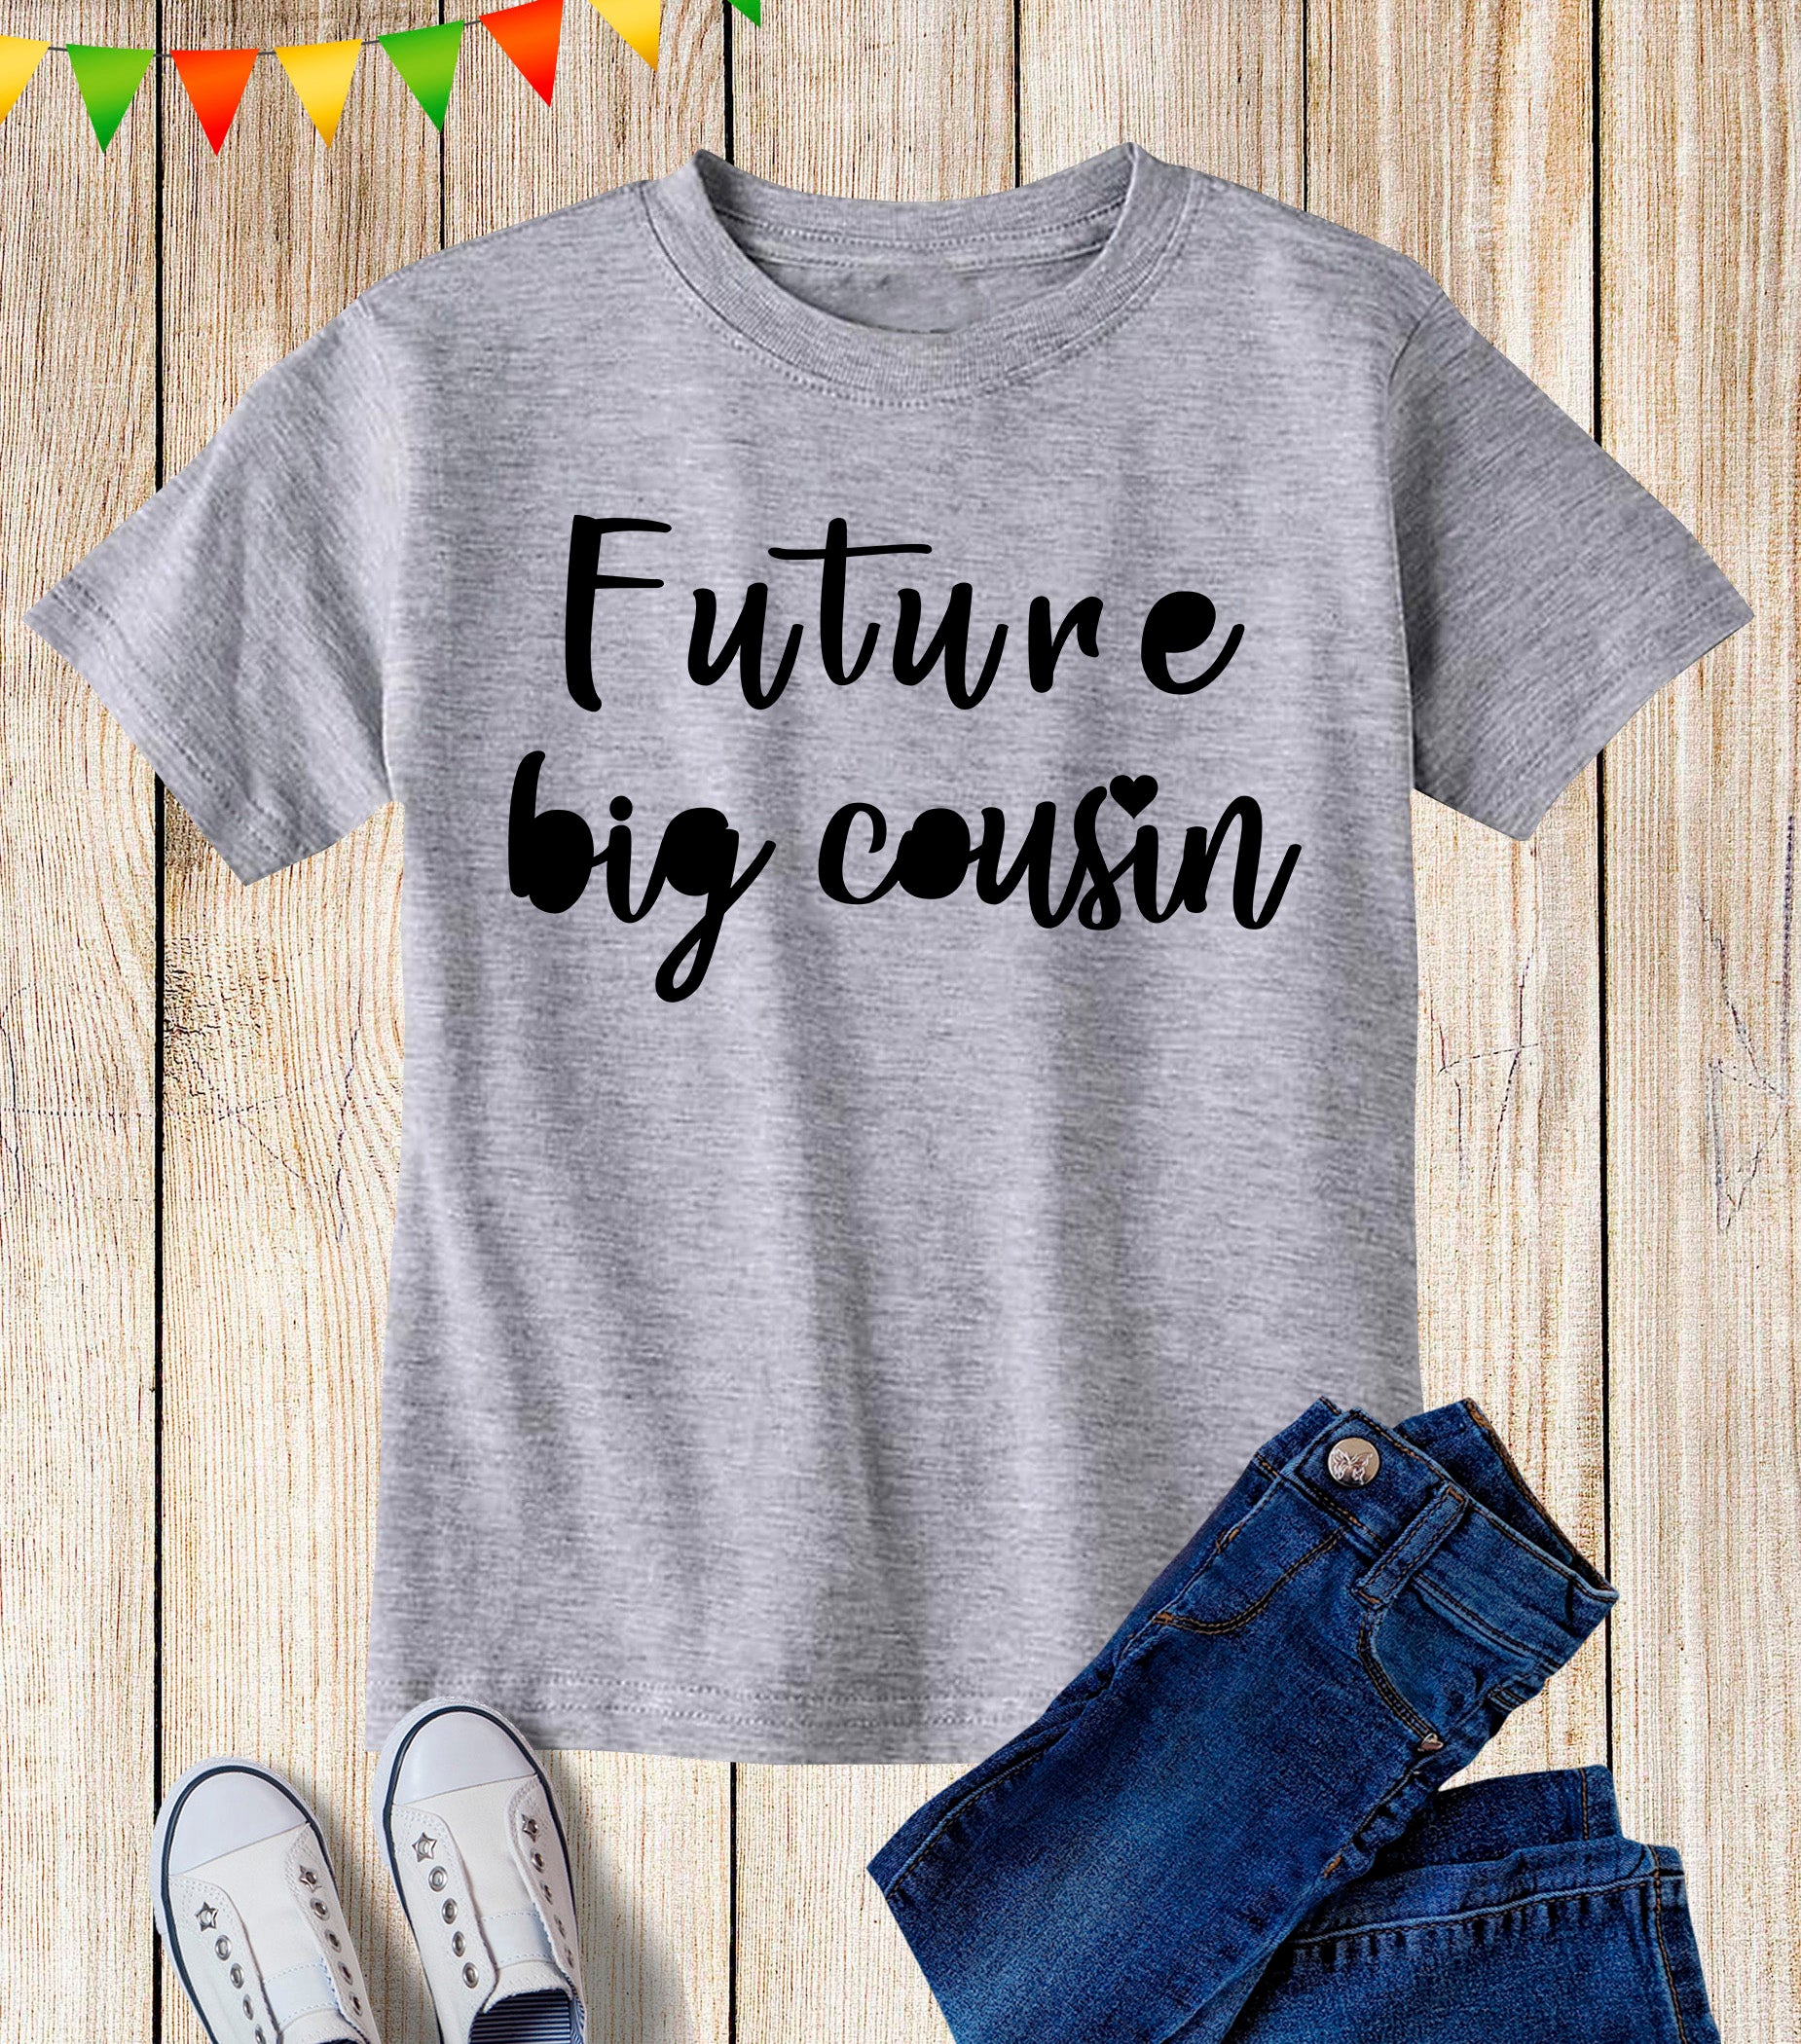 Future Big Cousin Kids T Shirt